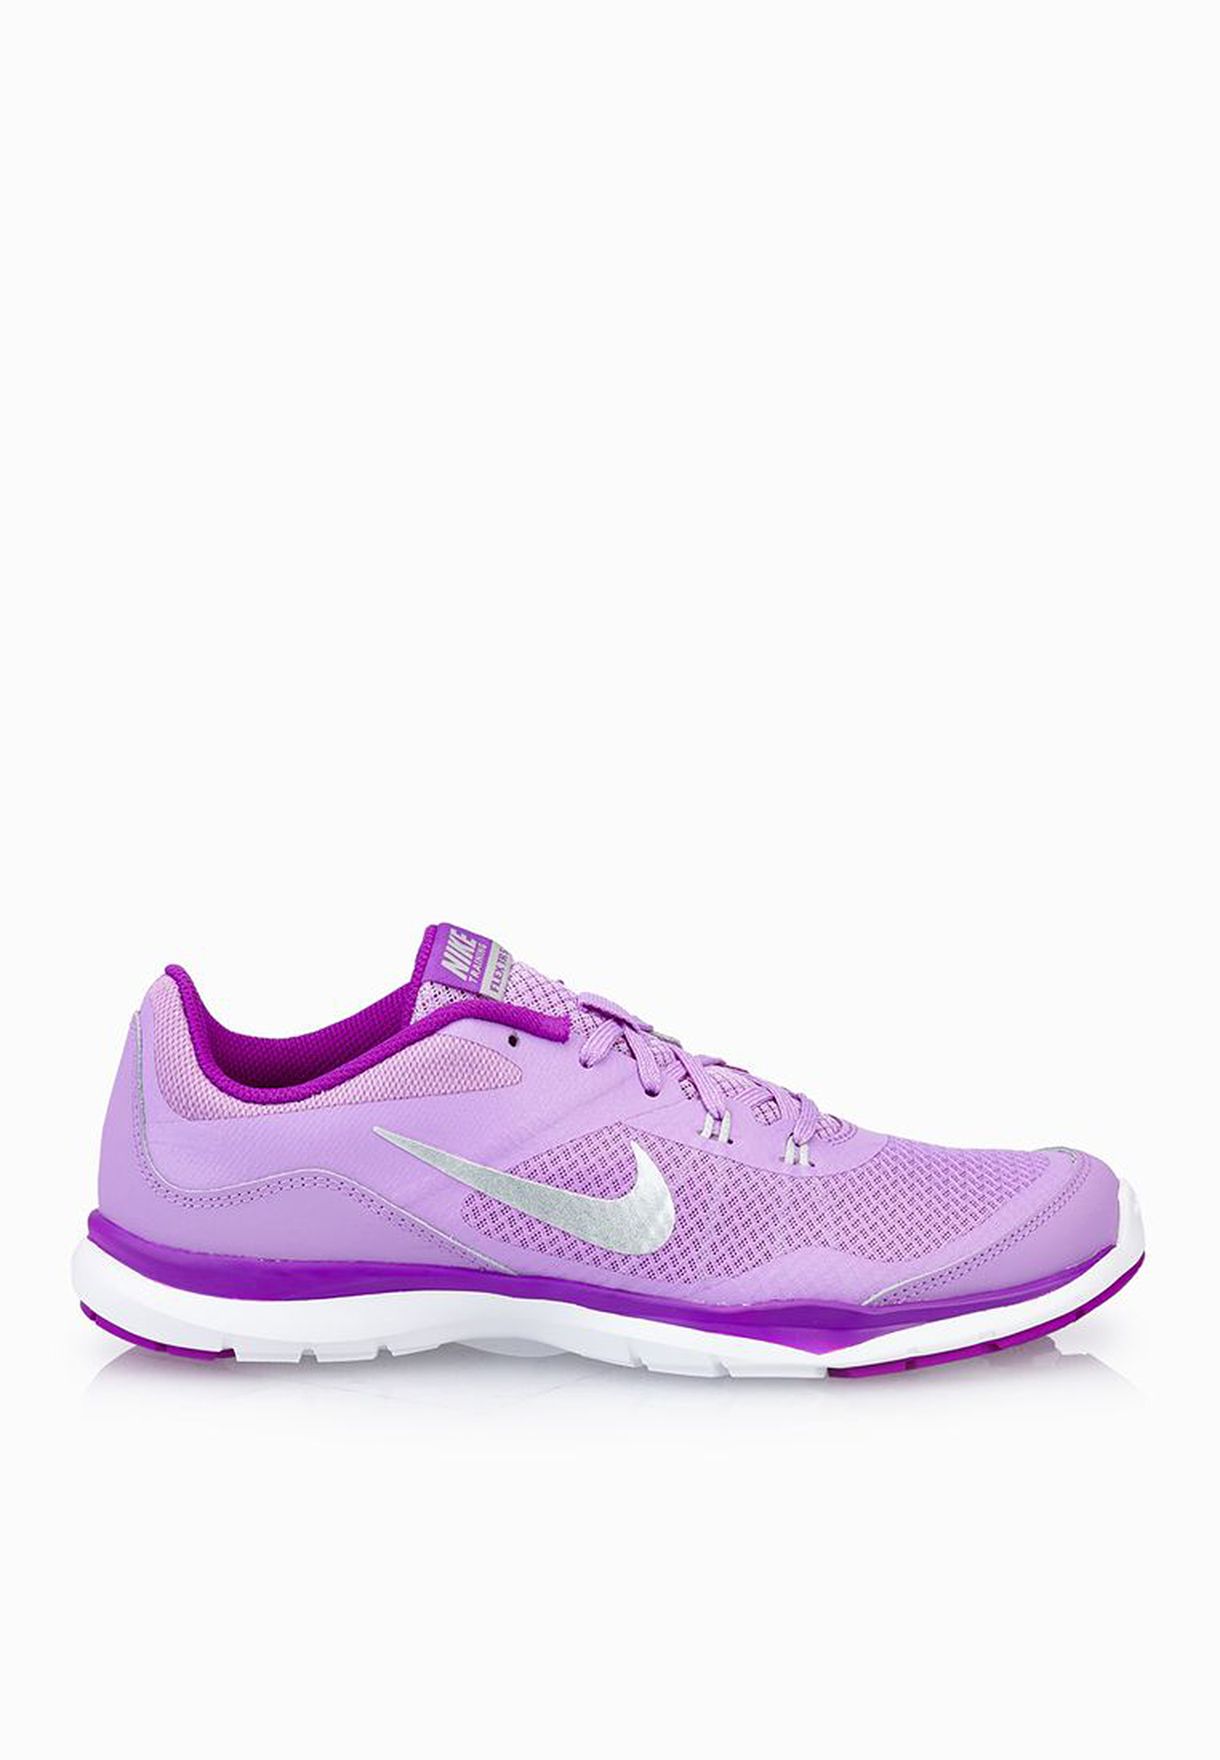 Buy Nike purple Flex Trainer 5 for 